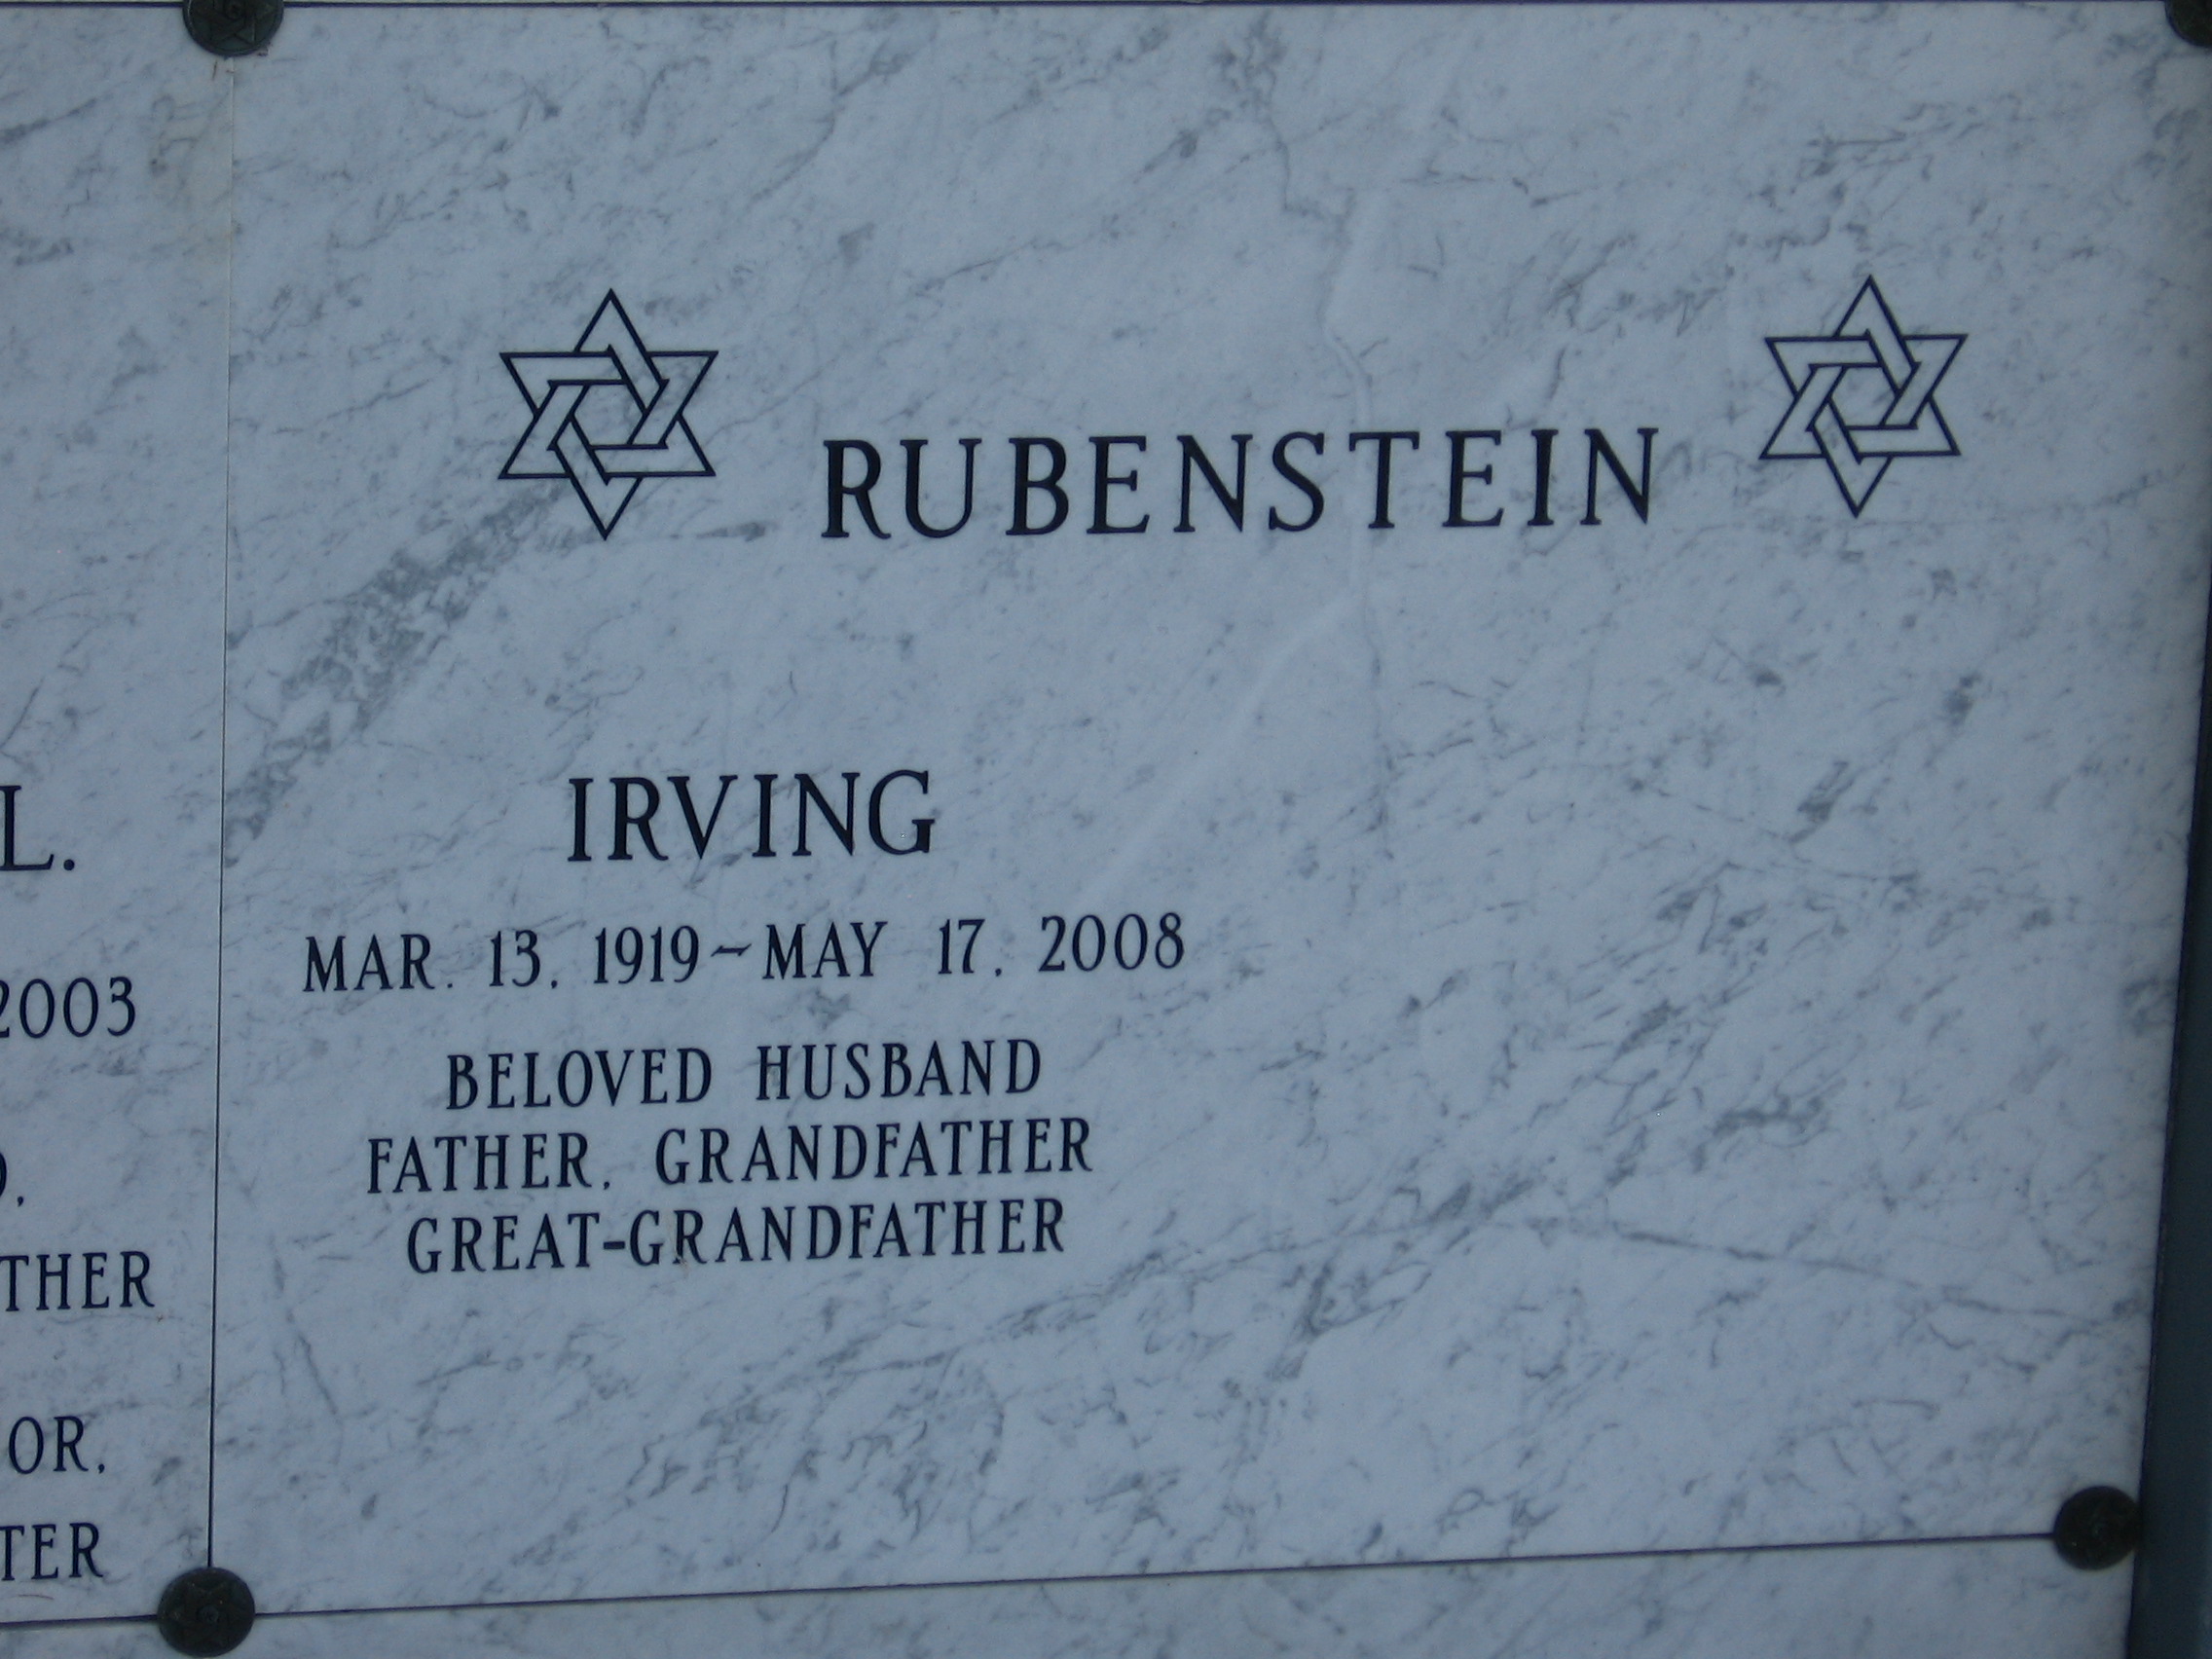 Irving Rubenstein